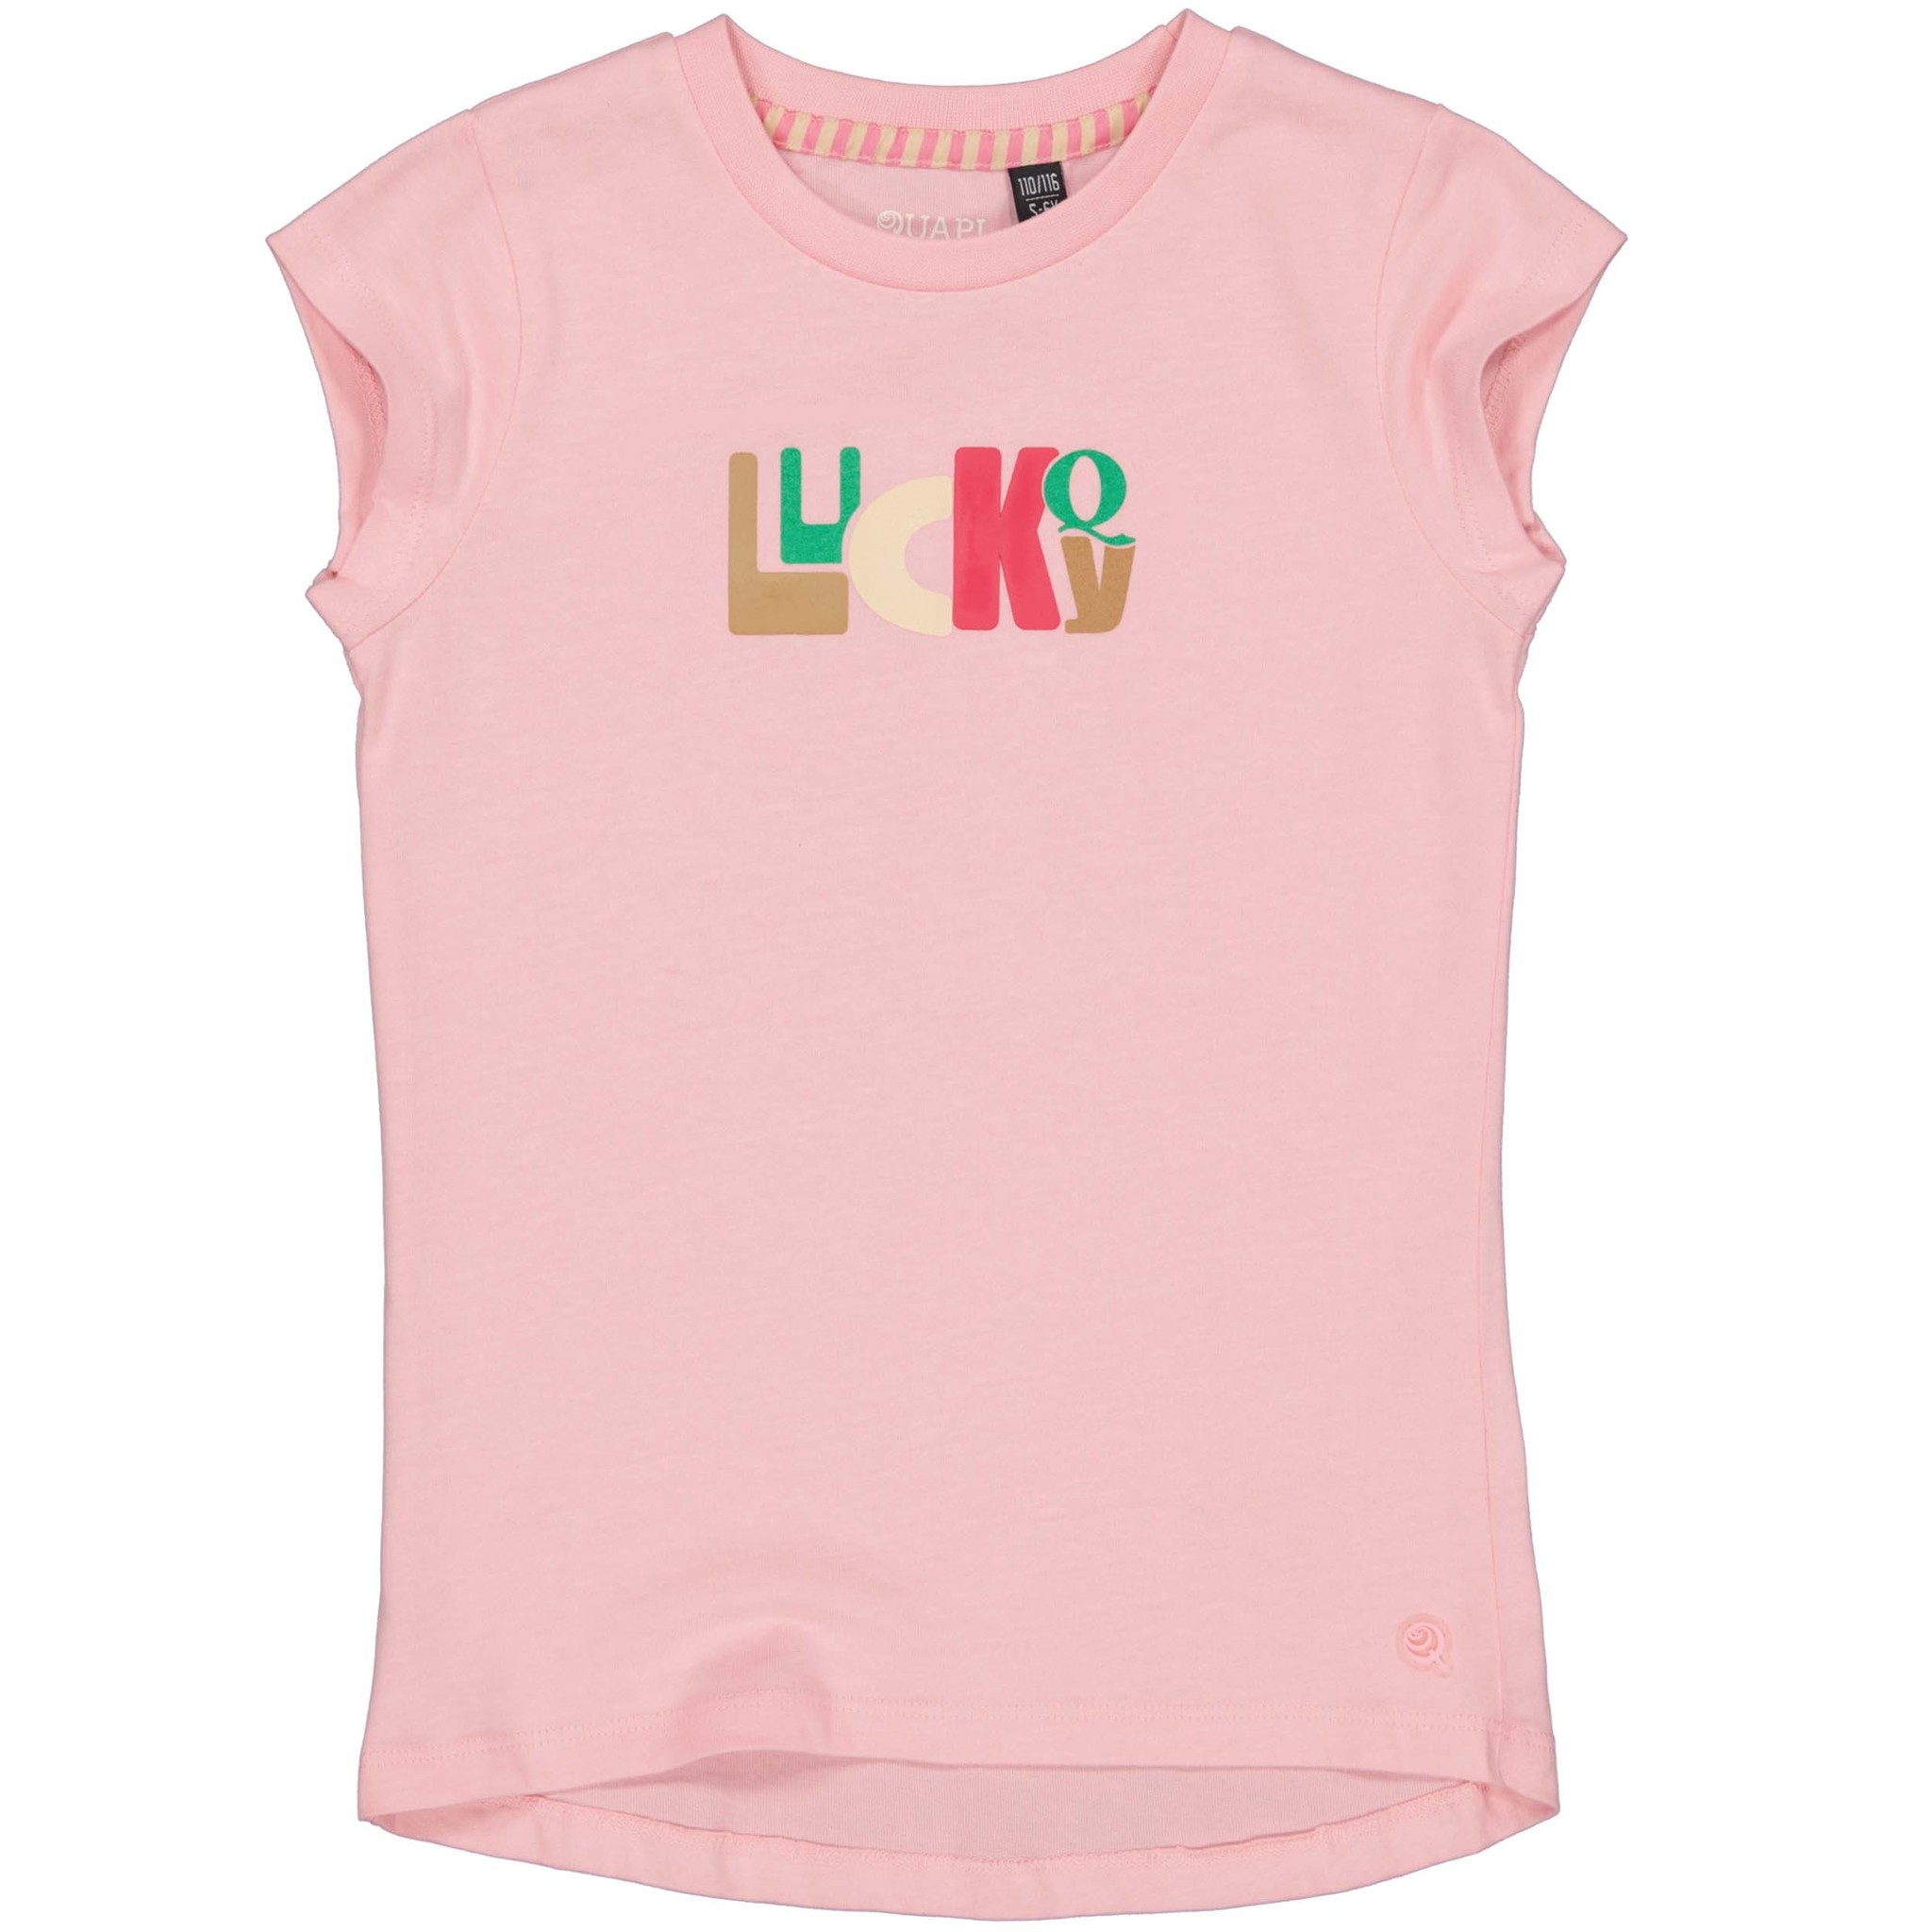 Quapi Meisjes t-shirt - Tehila - Candy roze